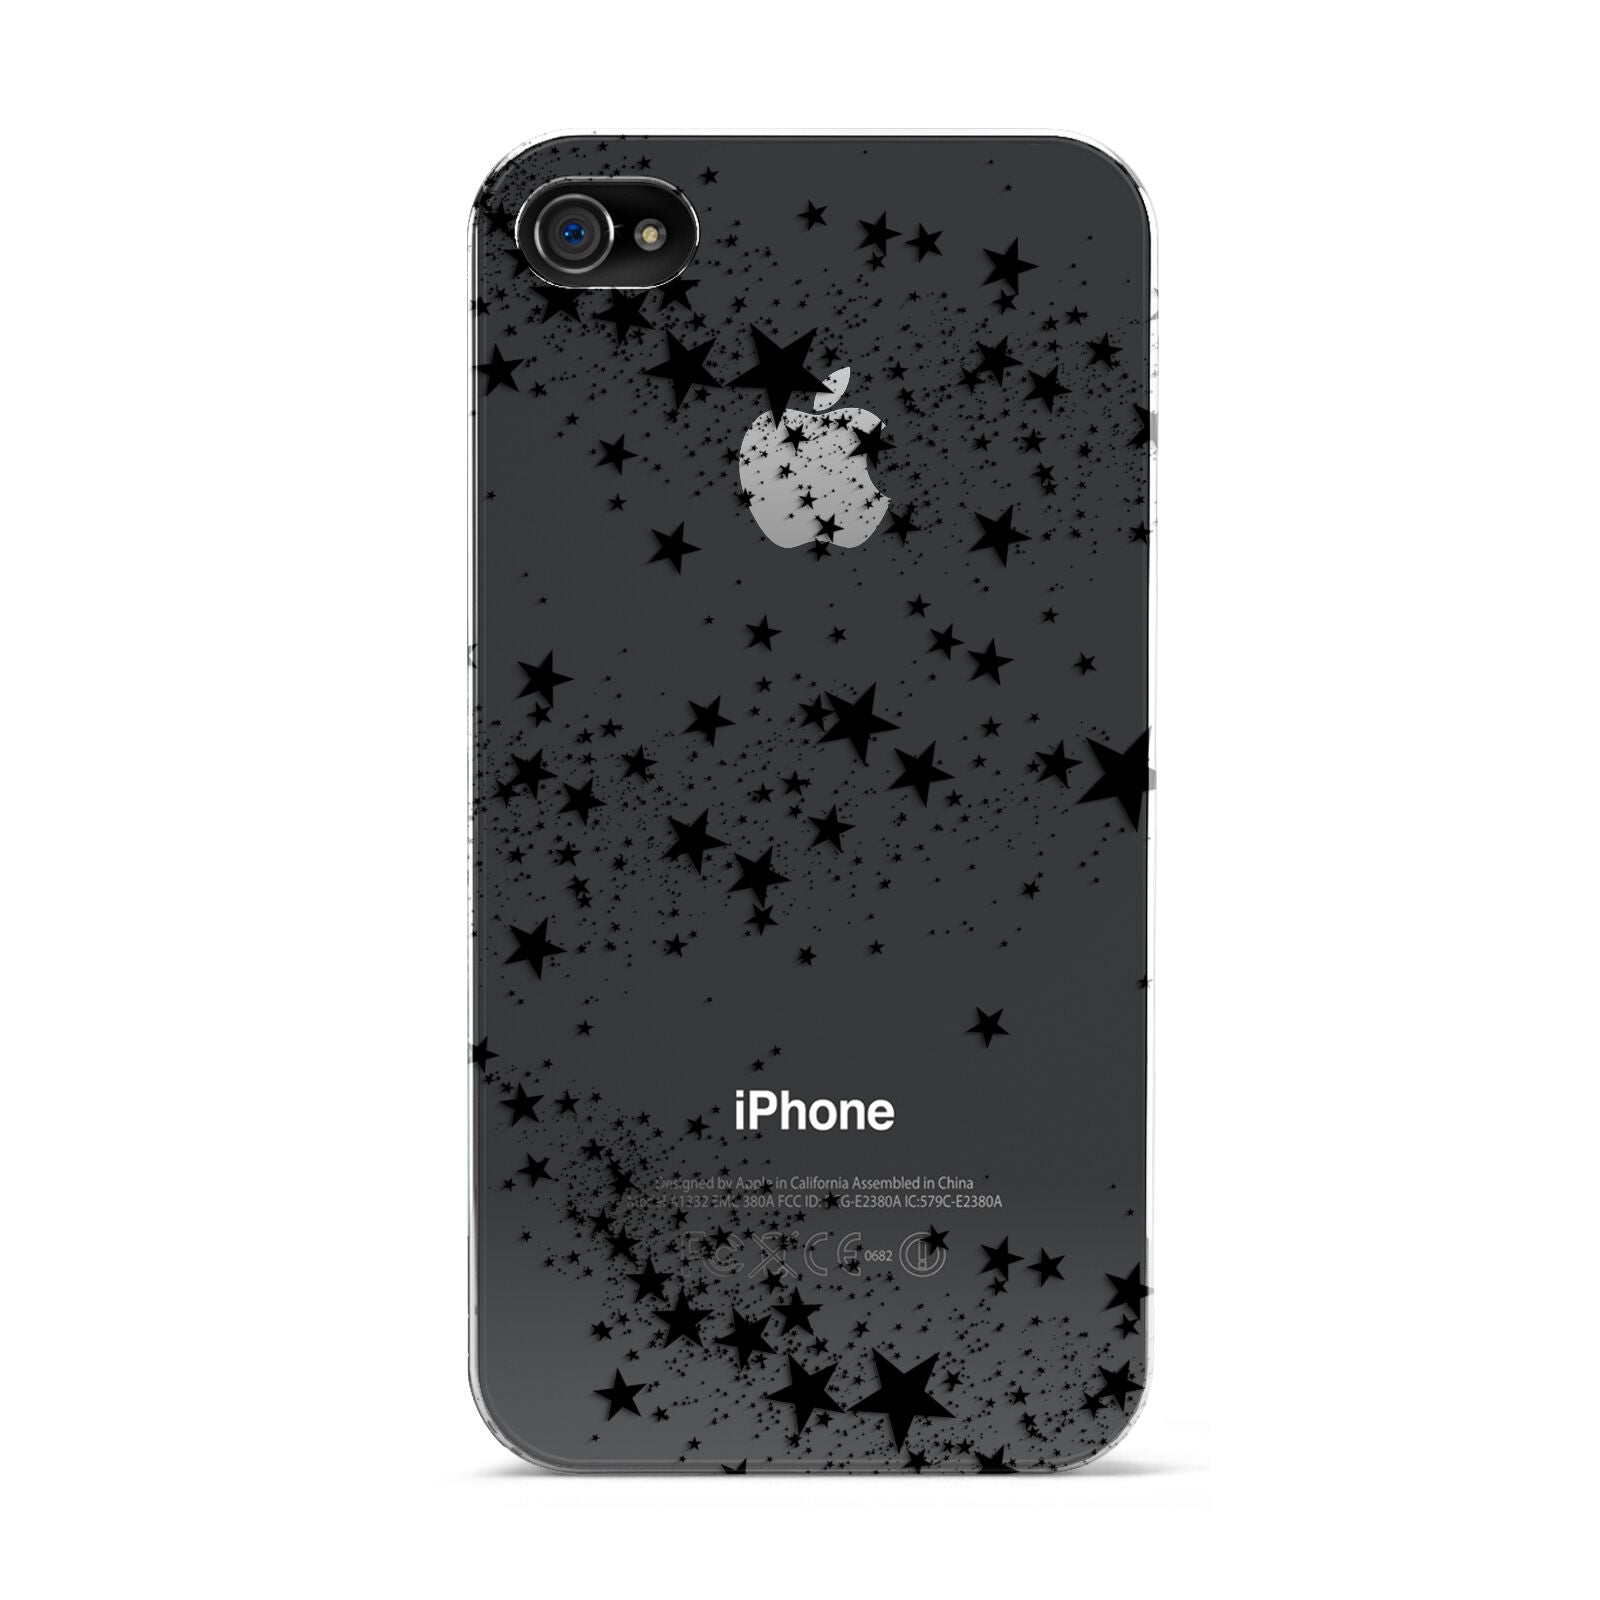 Shooting Stars Apple iPhone 4s Case